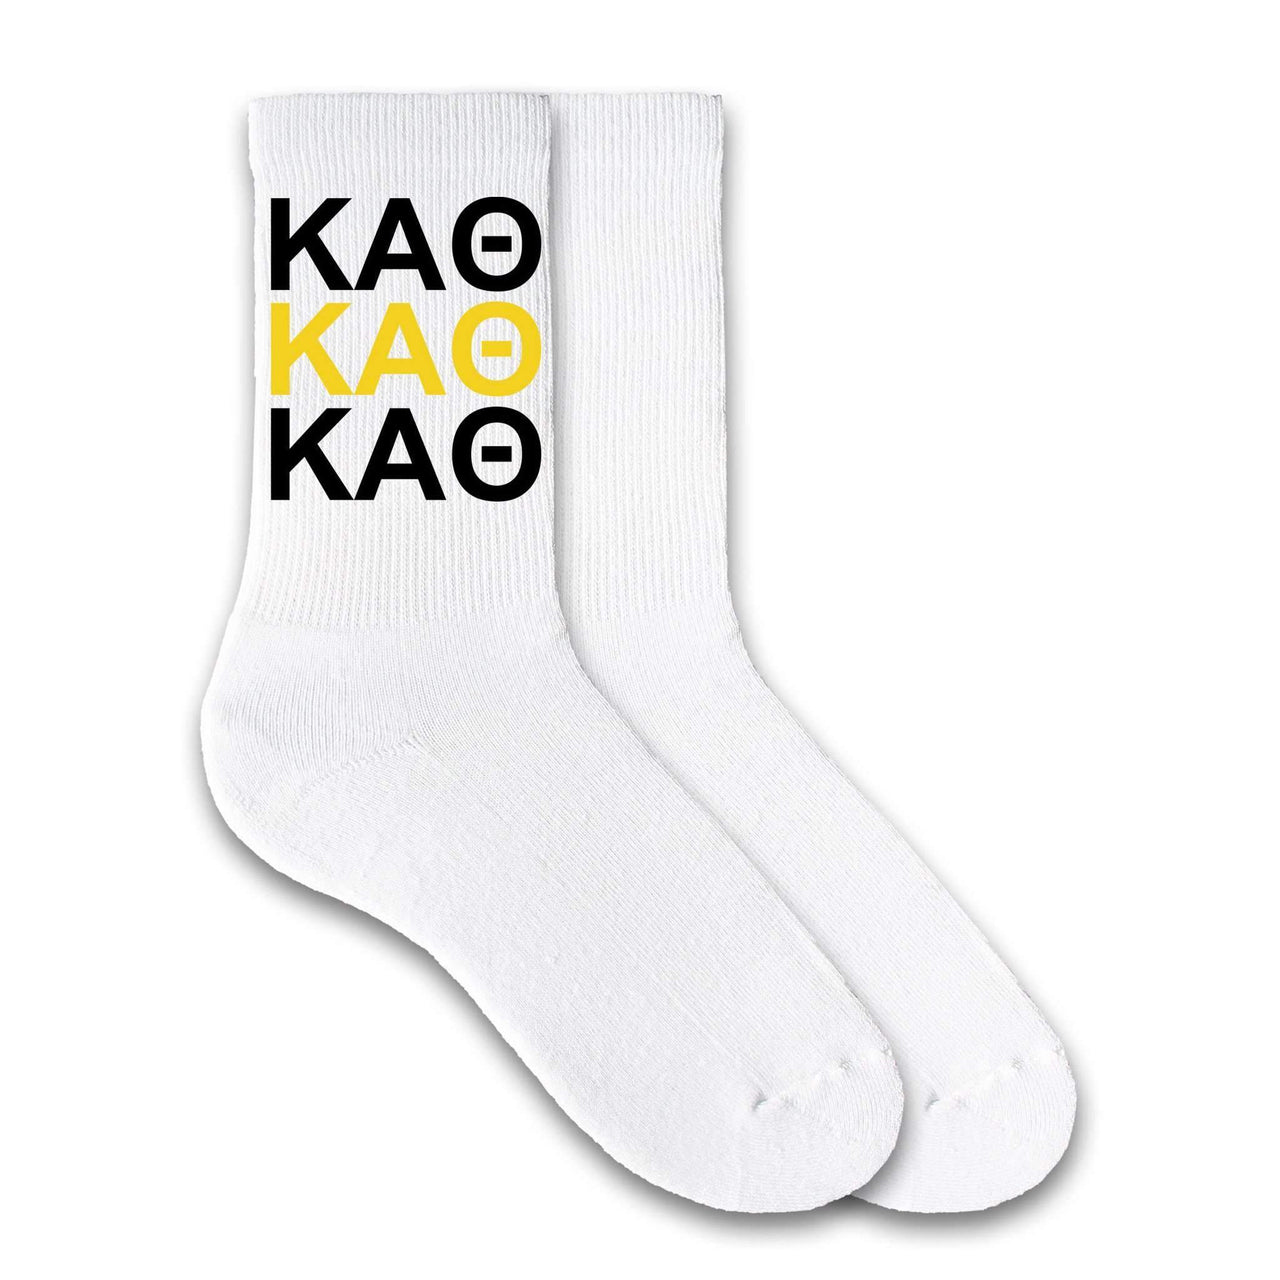 Kappa Alpha Theta sorority letters custom printed on white cotton crew socks